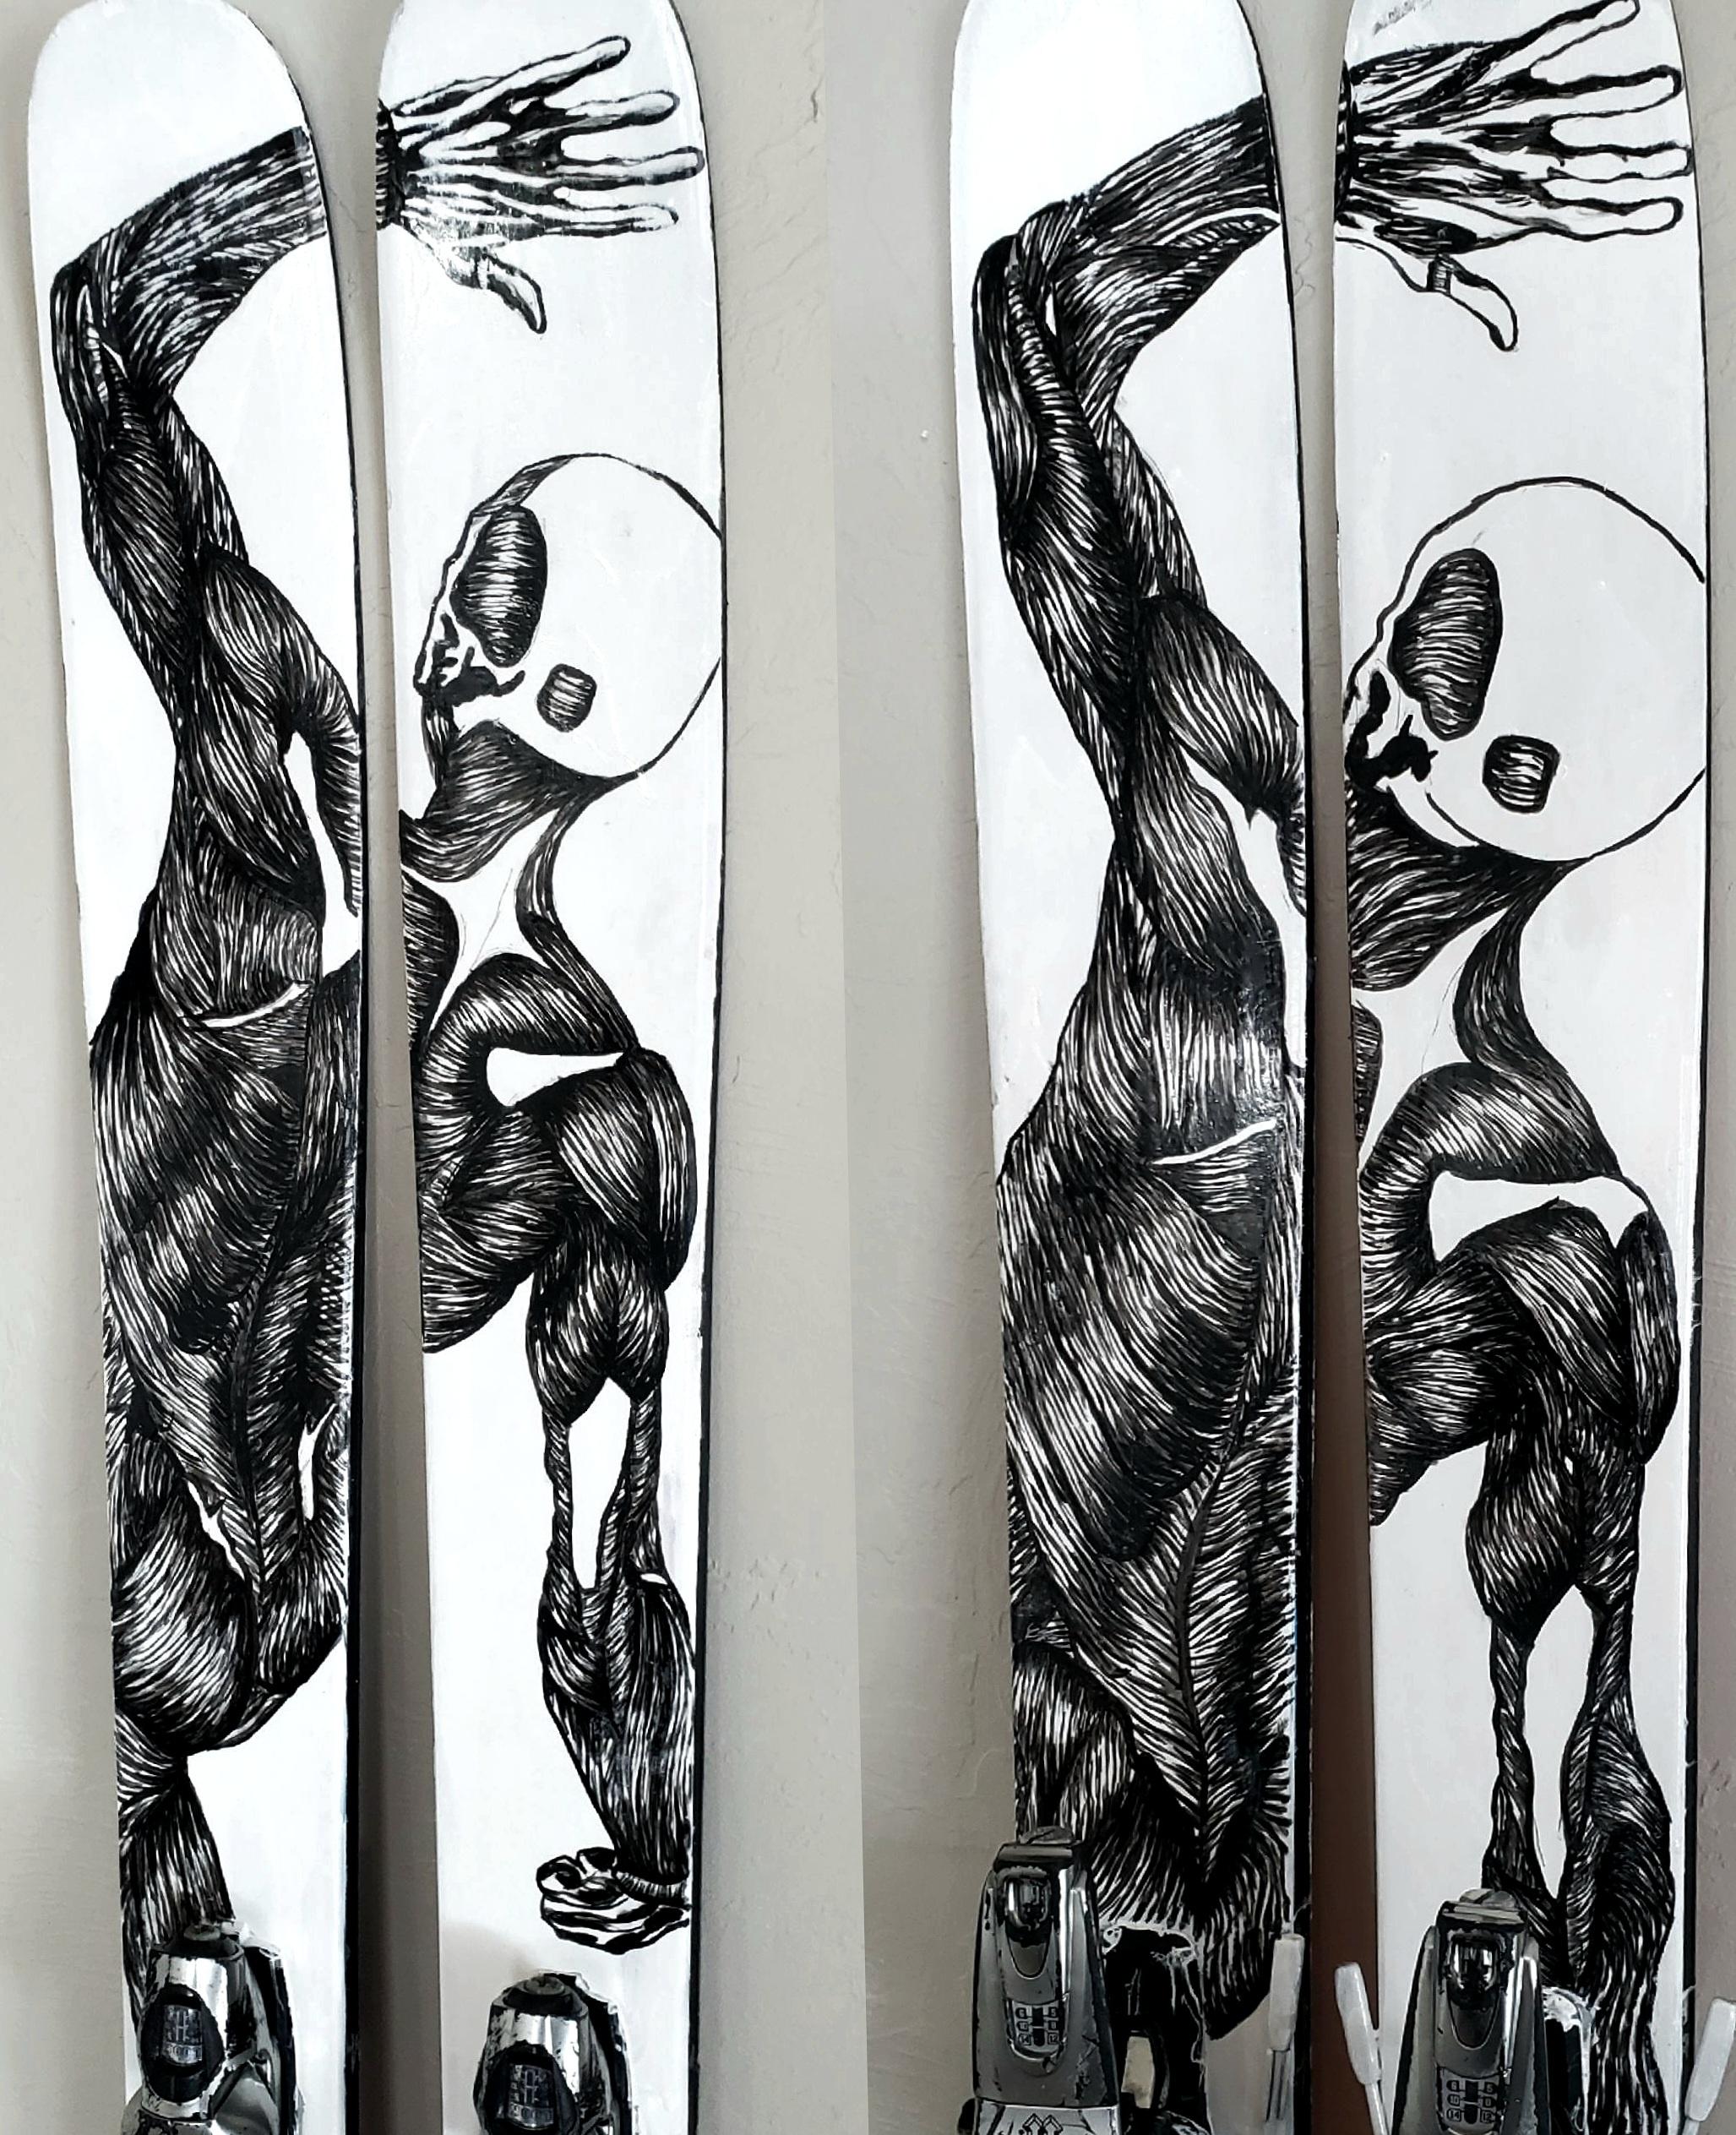 Ėcorché Painted skis